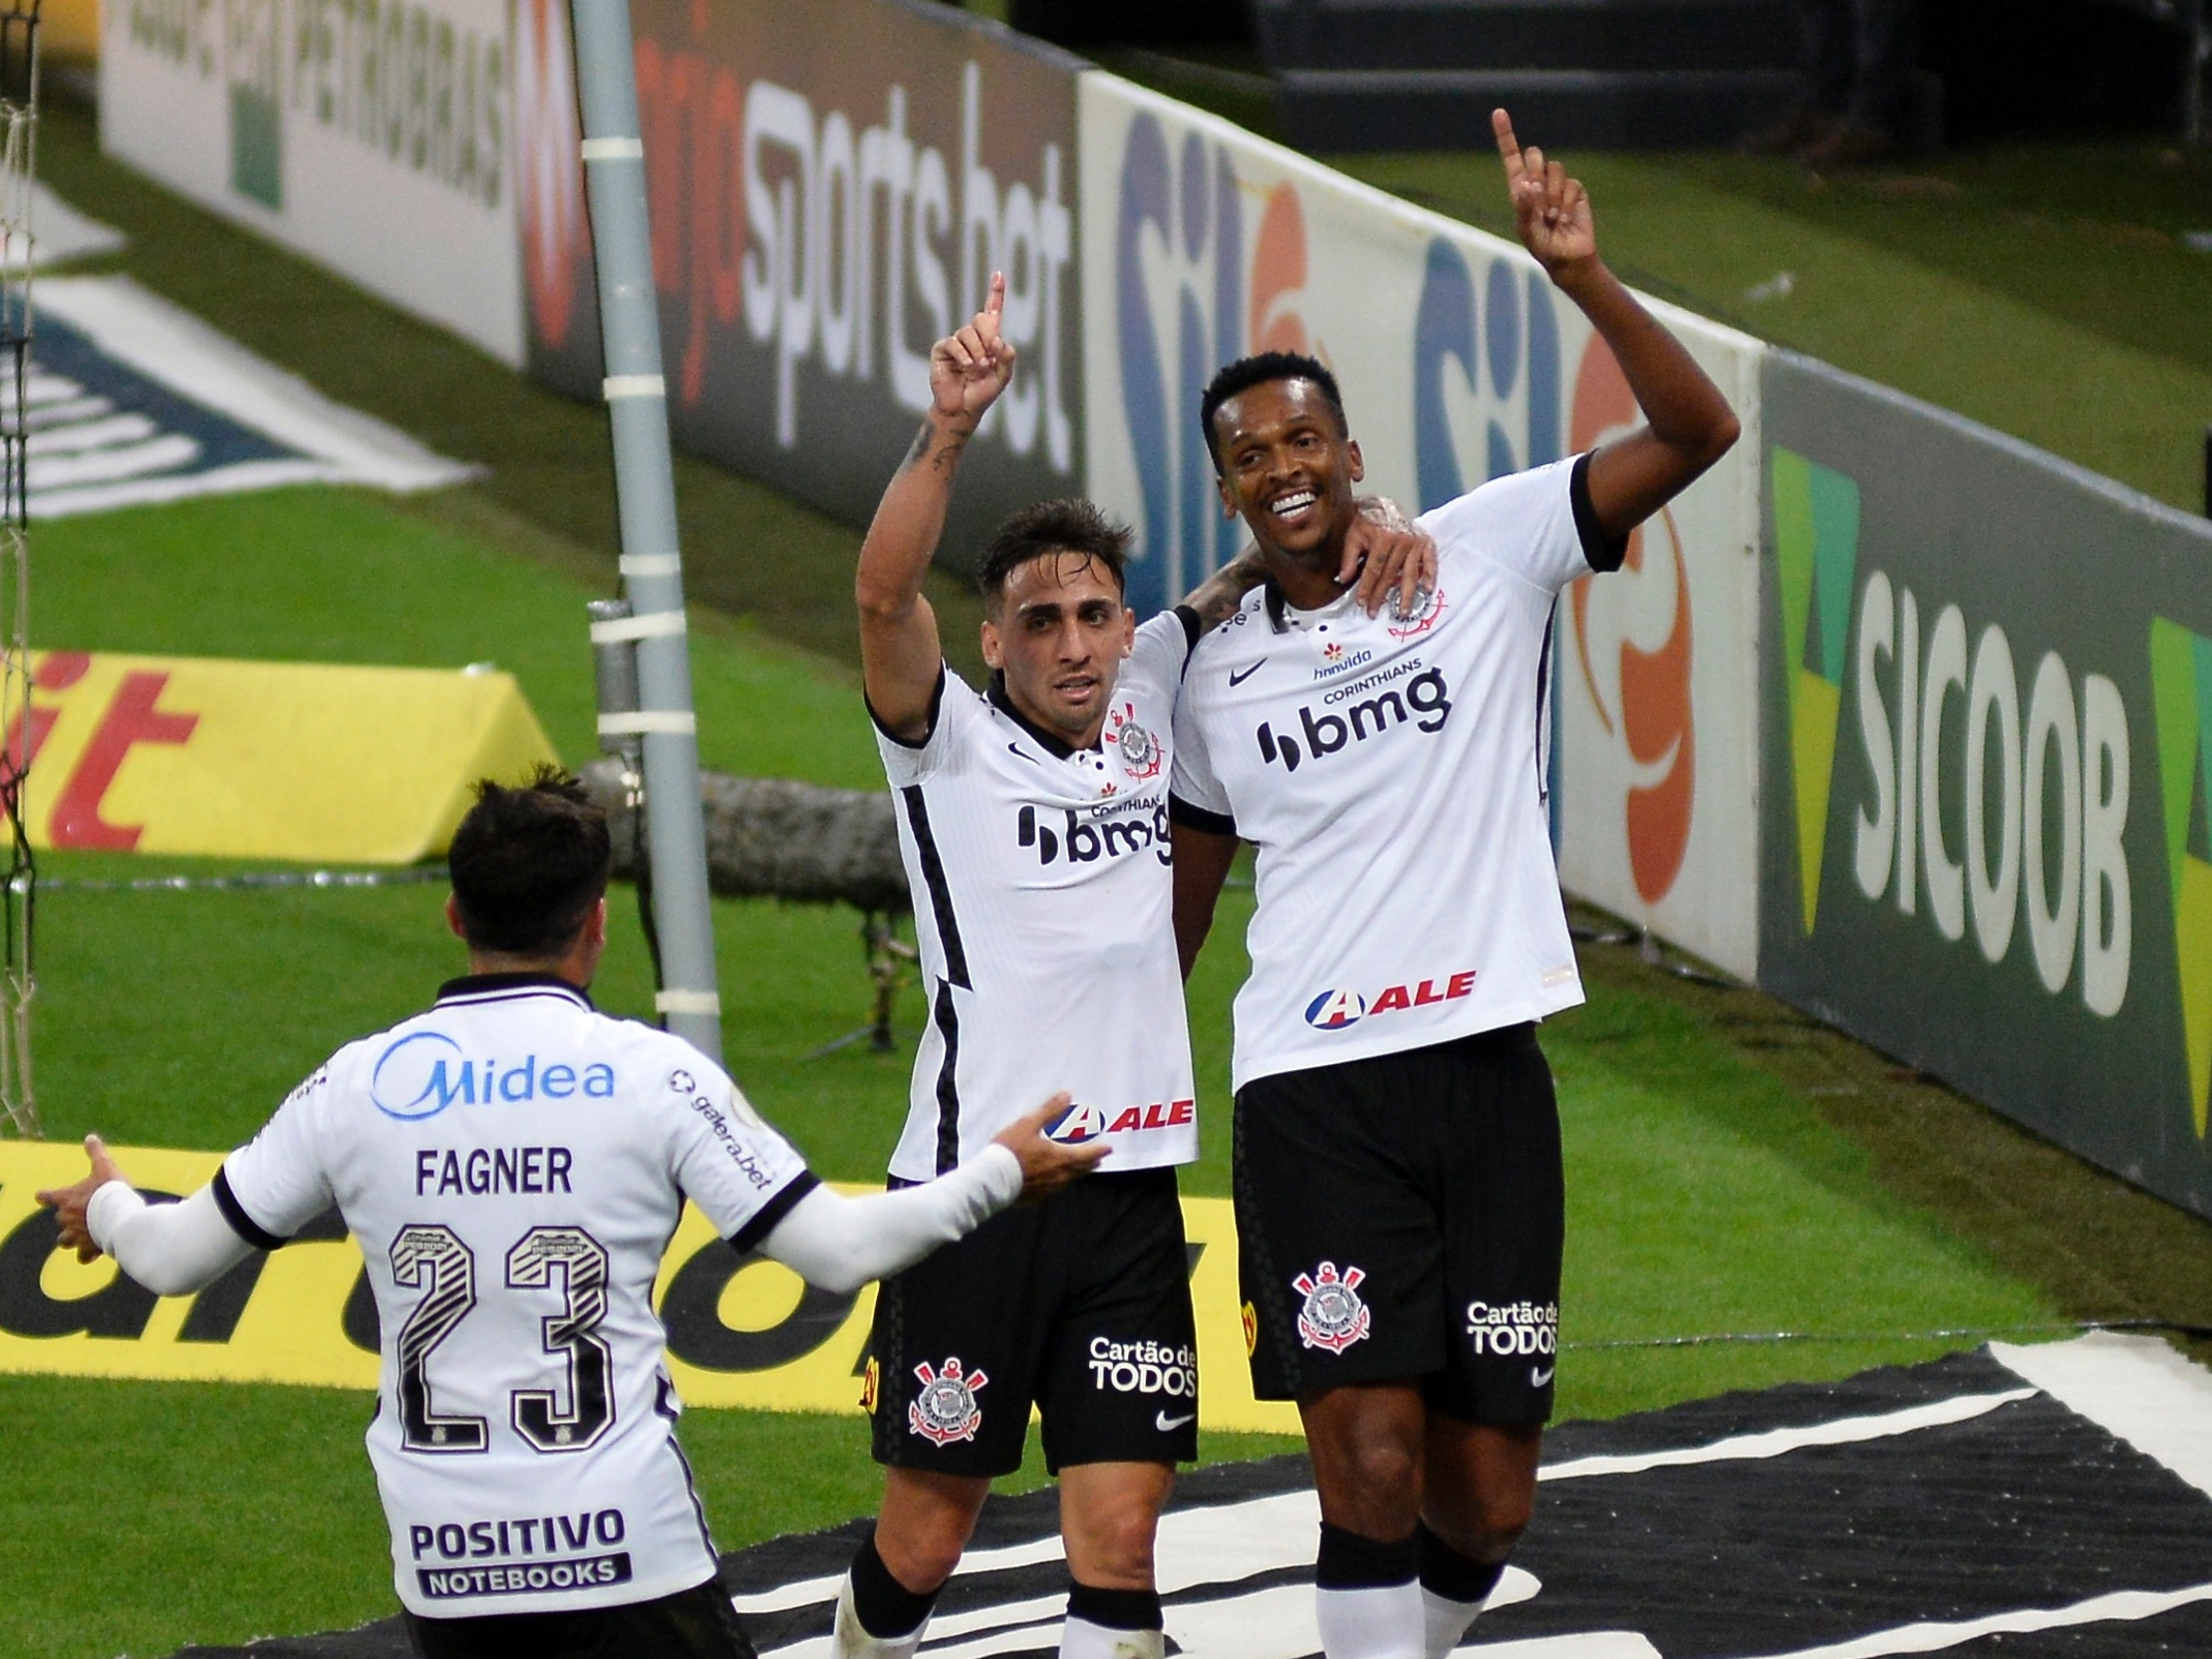 Corinthians surpreende e goleia Fluminense – Agora Laguna